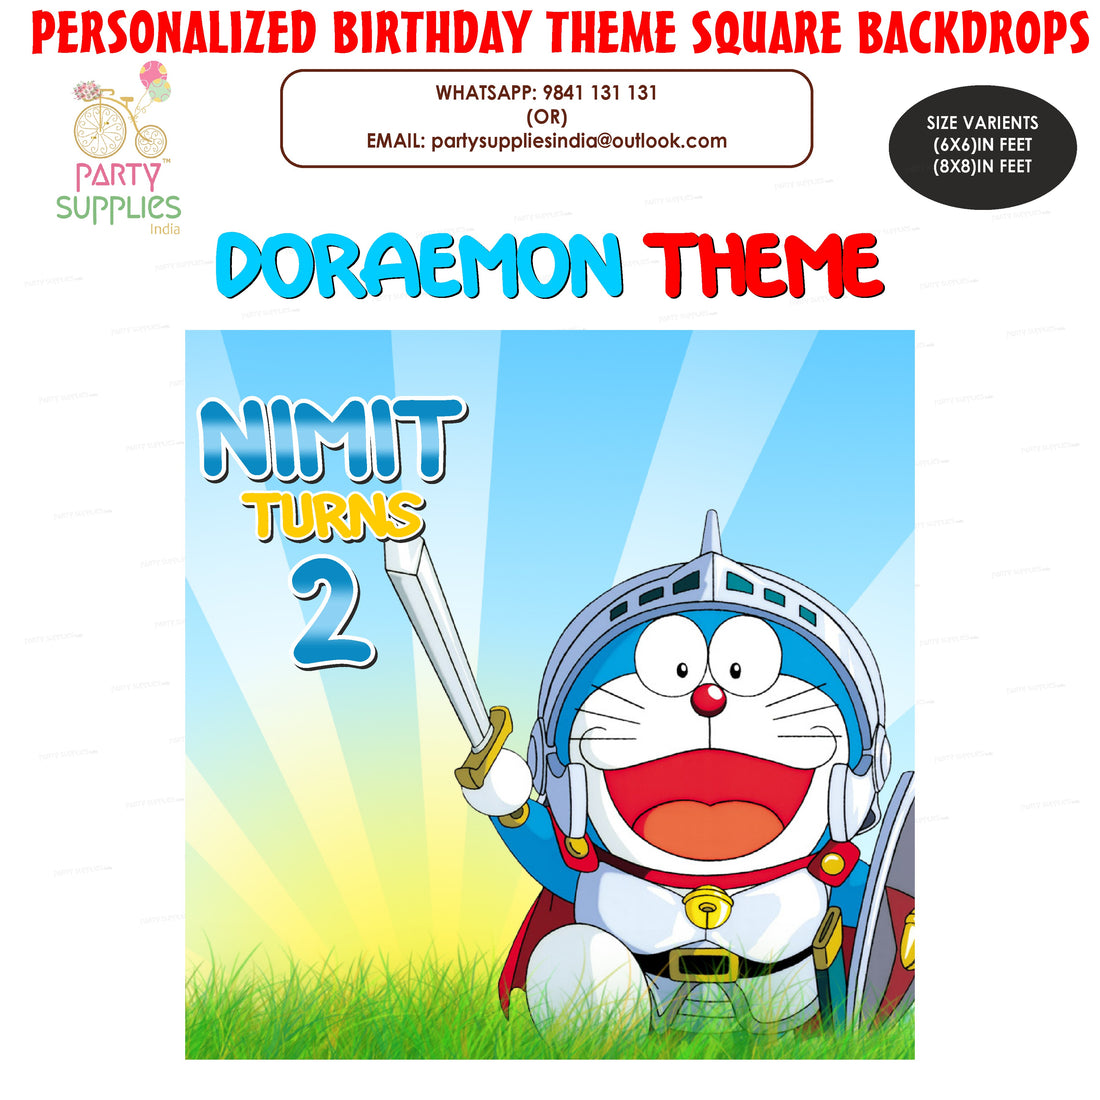 PSI Doraemon Theme Square Backdrop